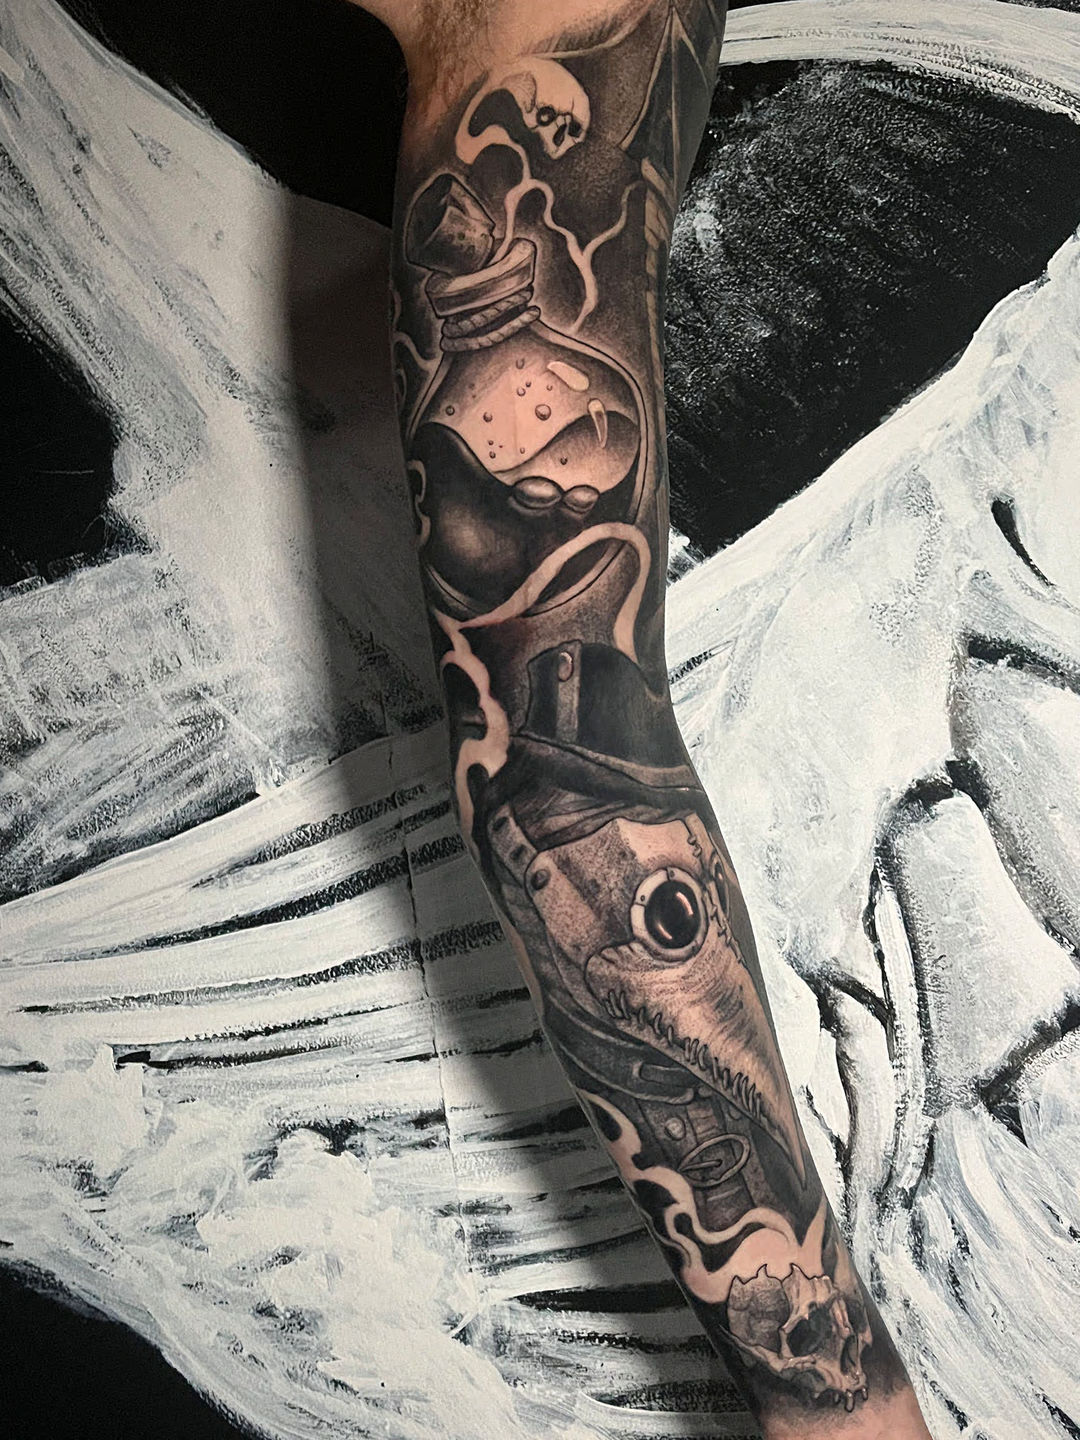 Zelda sleeve finished inside arm by theisnoworld on DeviantArt